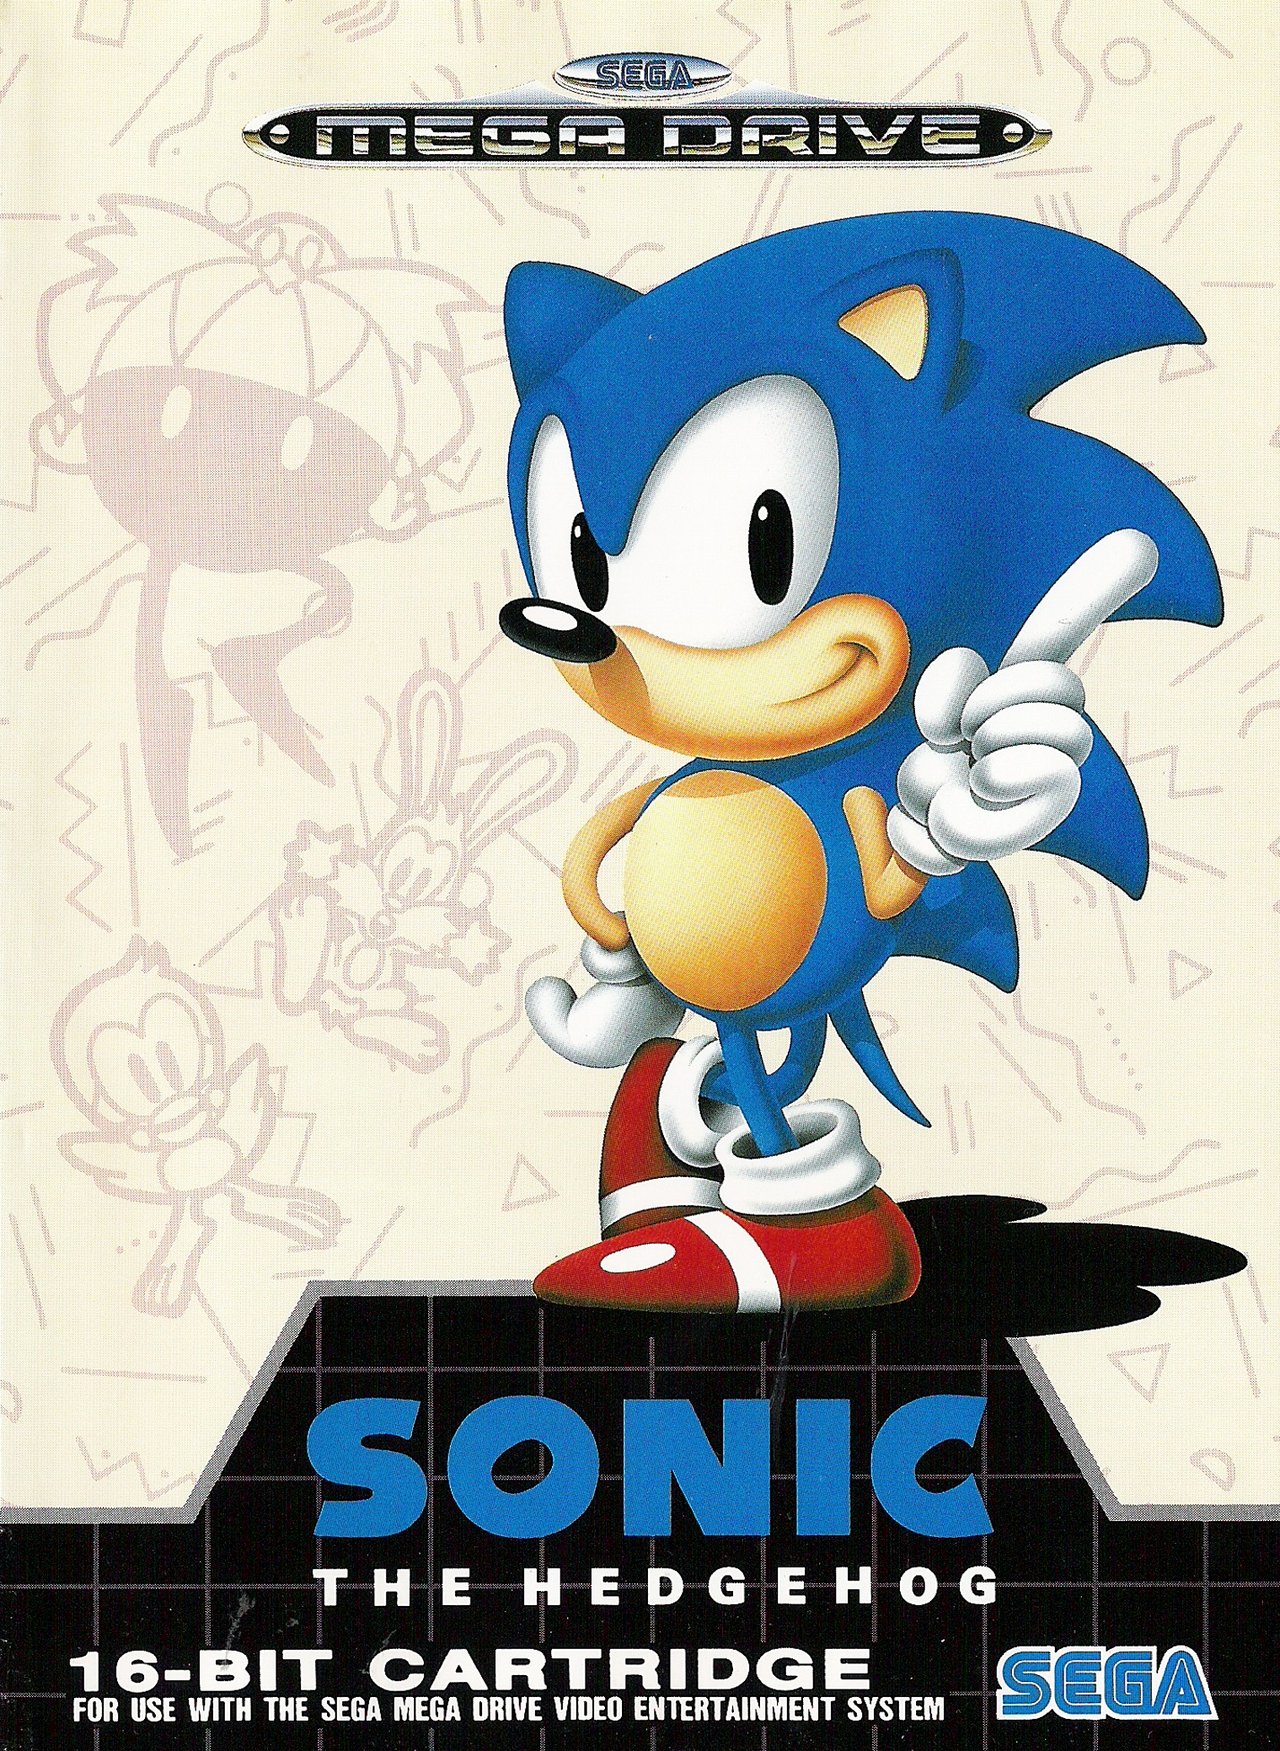 Sonic the Hedgehog Covers, SEGA Game Gear :: DJ OldGames